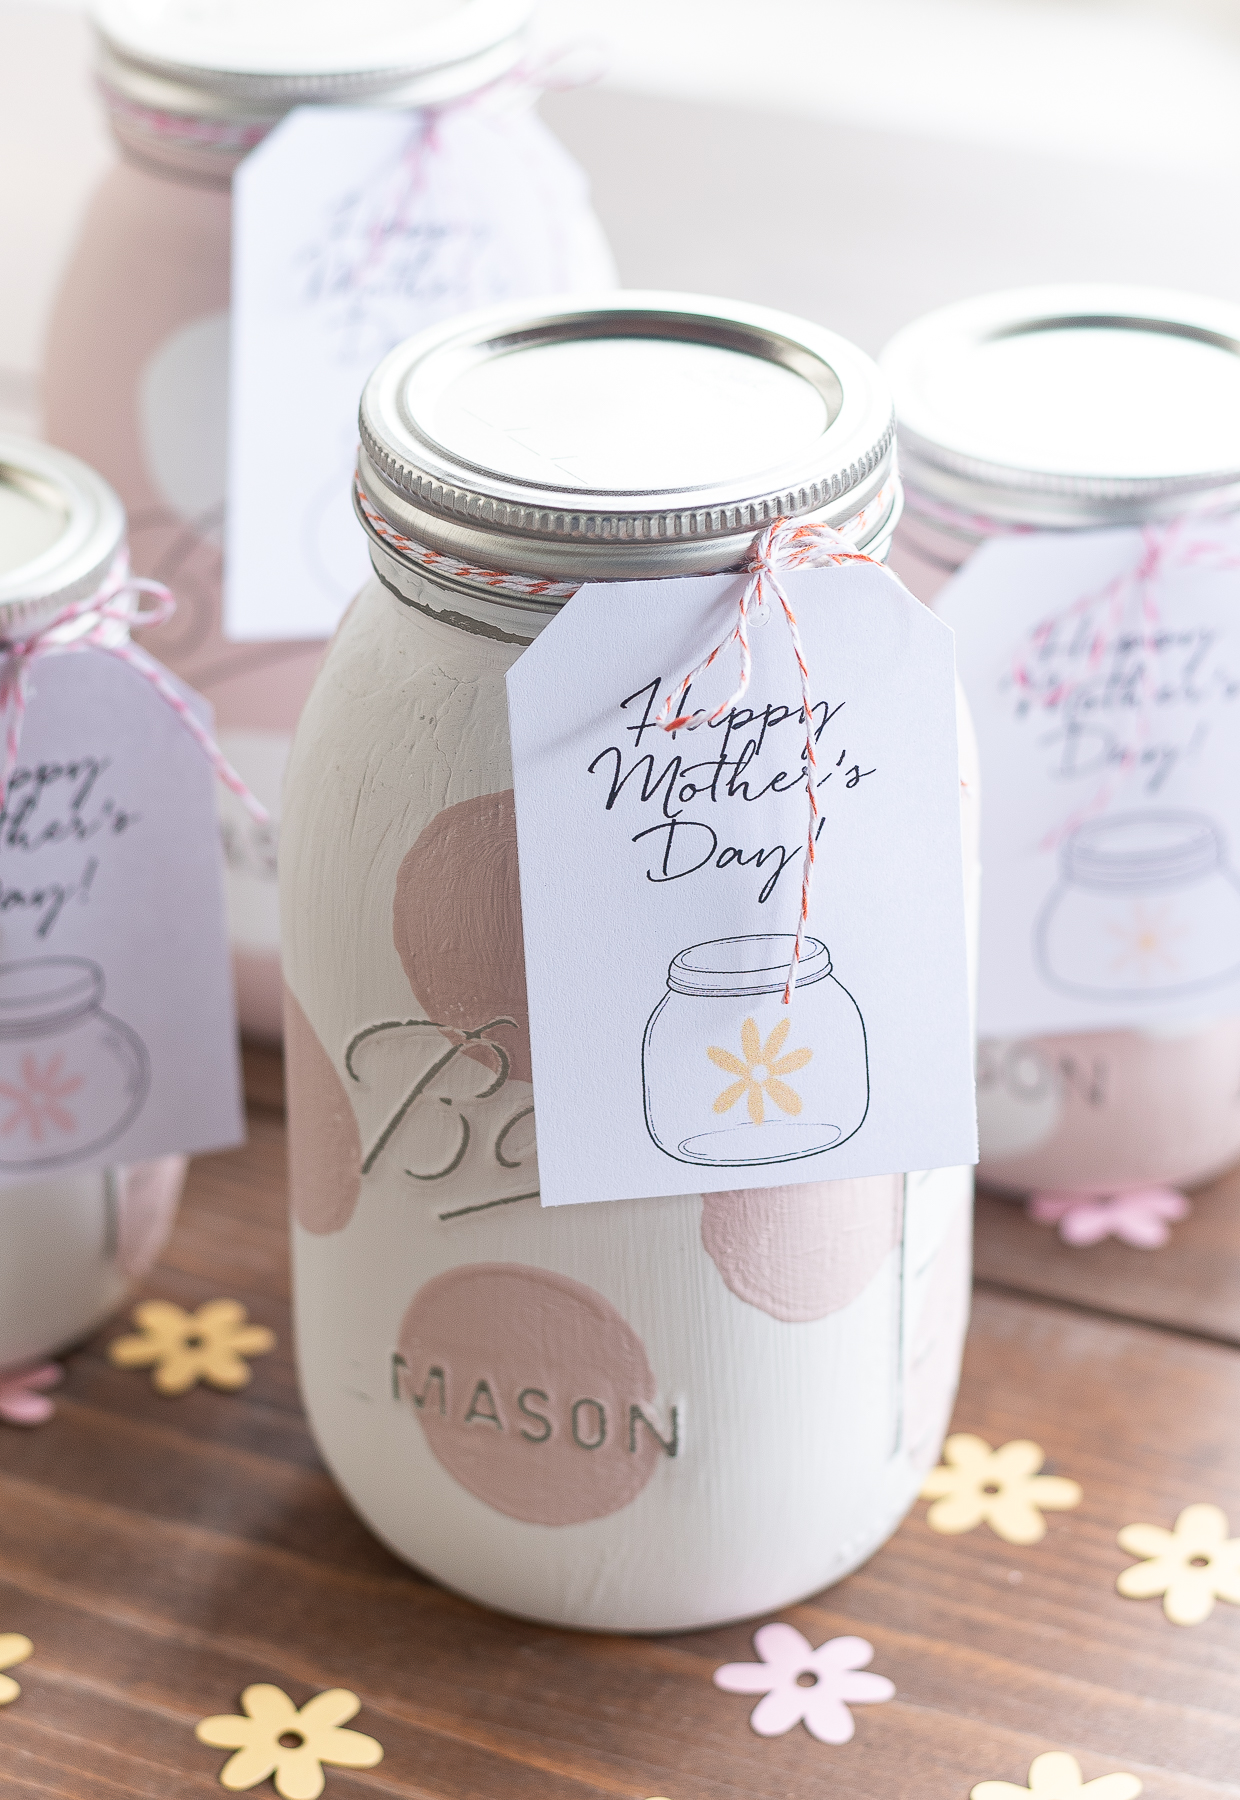 Mother's Day Gift Tag Free Printable - Mason Jar Gift Tag for Mother's Day - Free Printable Mother's Day Gift Tags